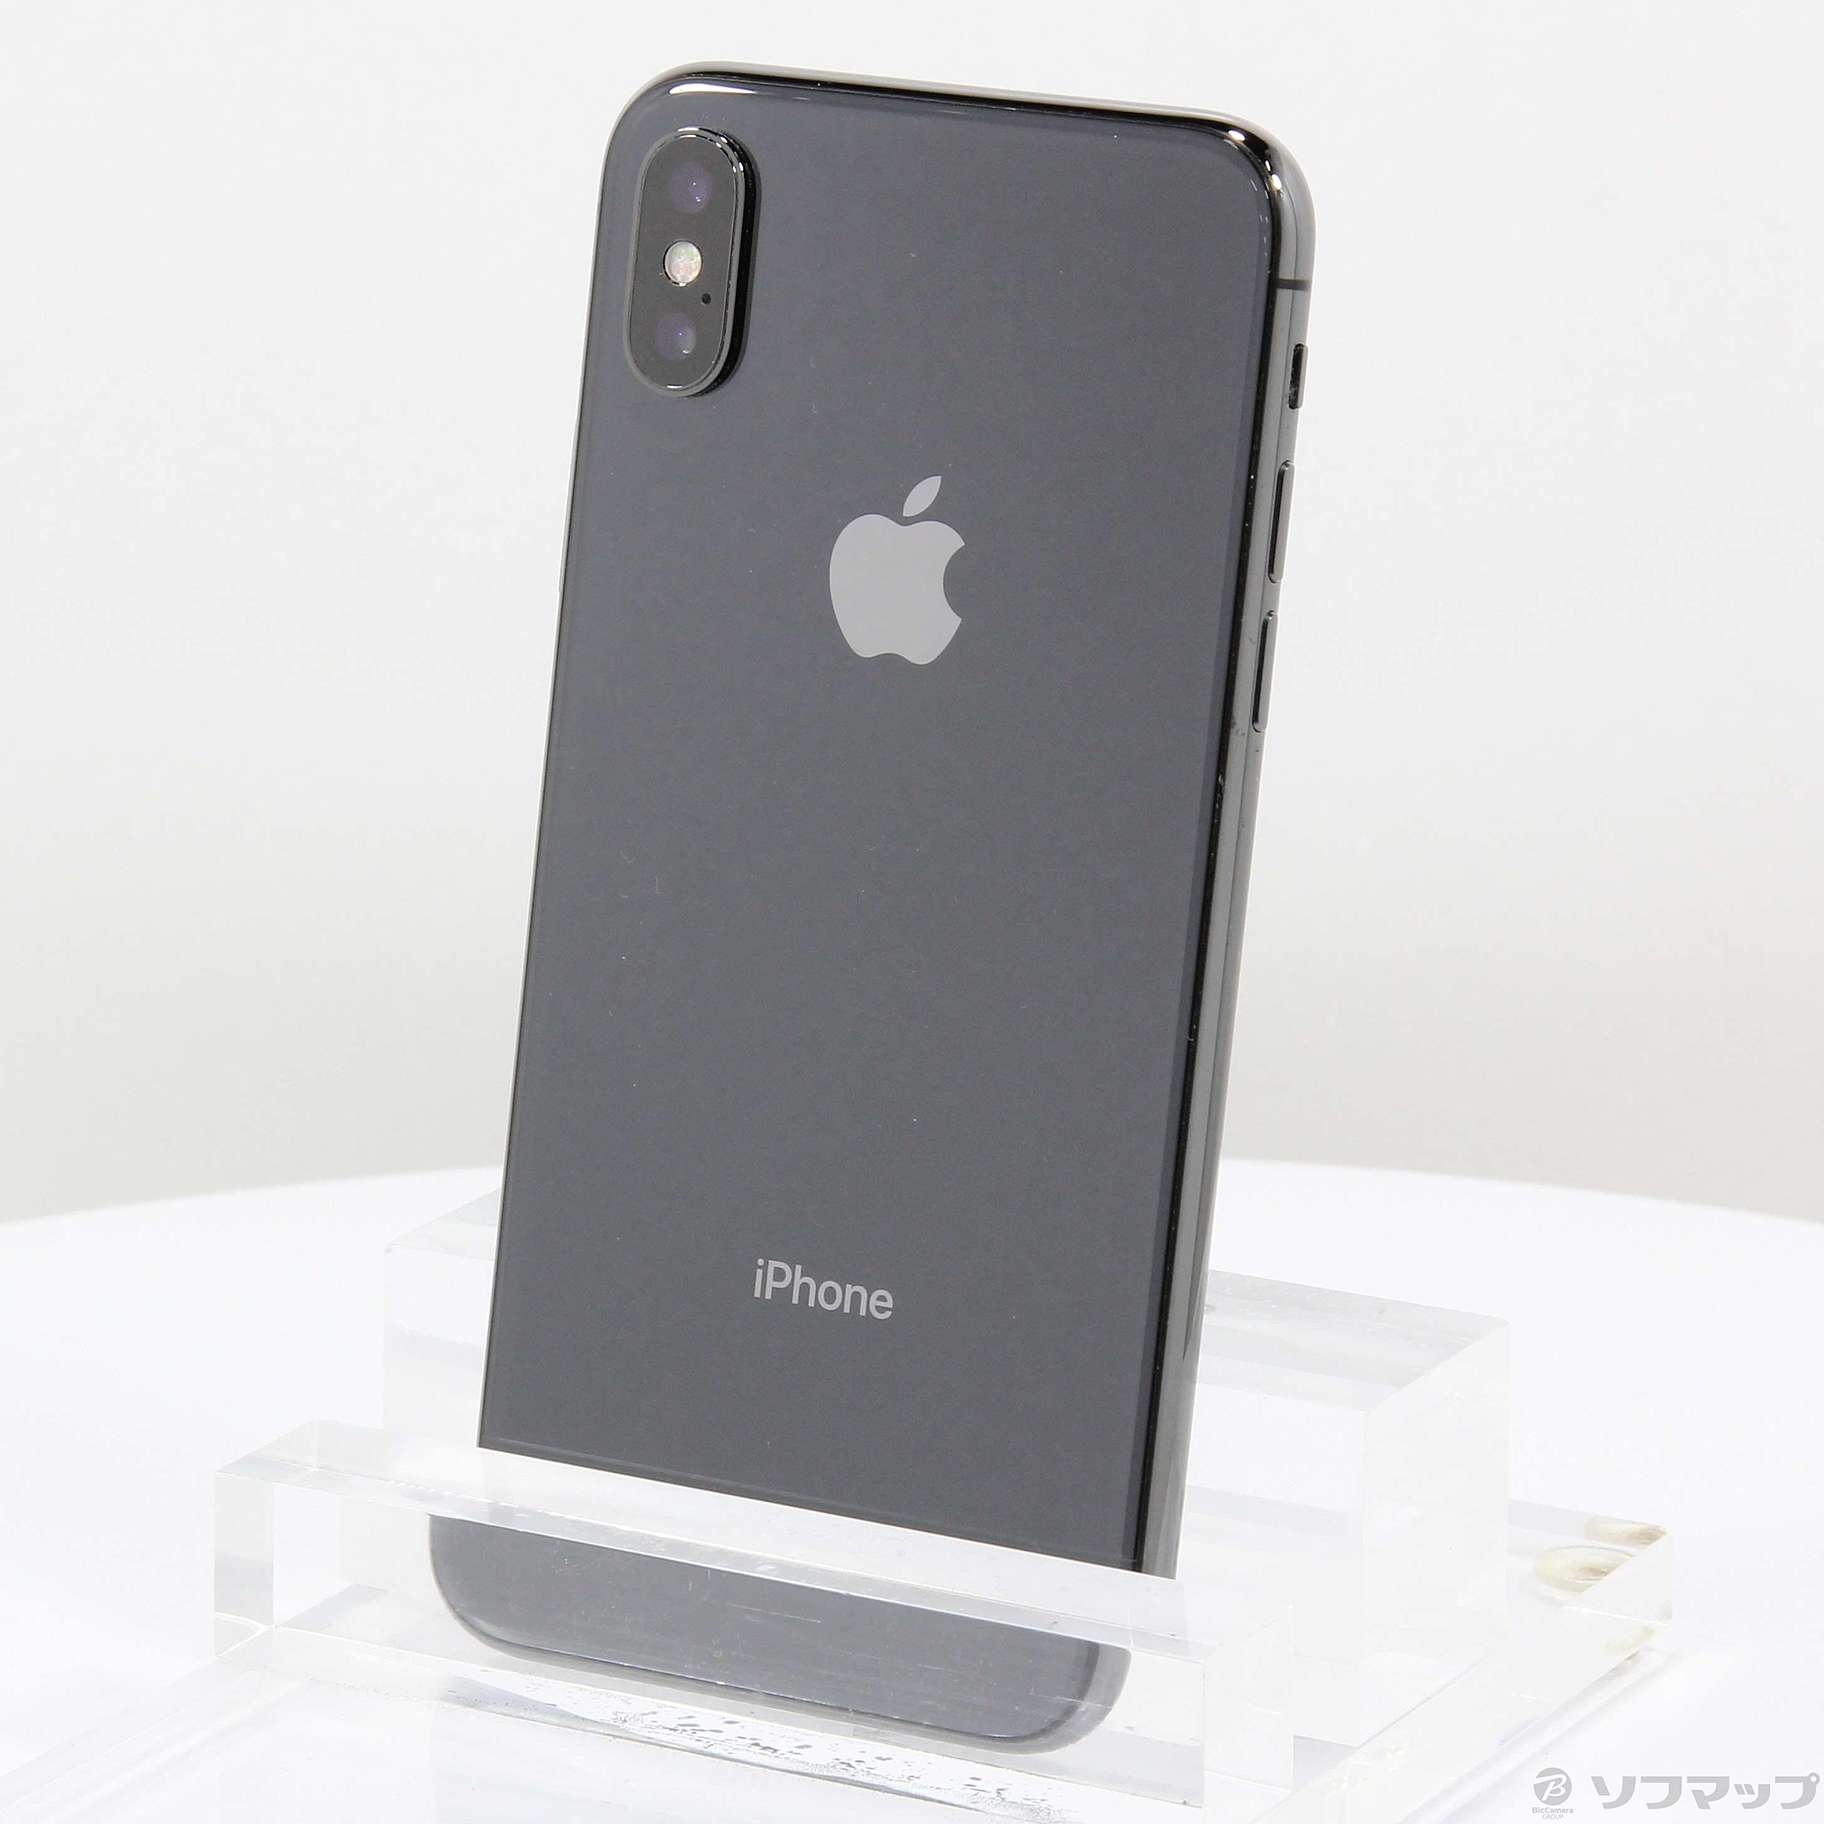 iPhone X 256GB SIMフリー [スペースグレイ] 中古(白ロム)価格比較 - 価格.com